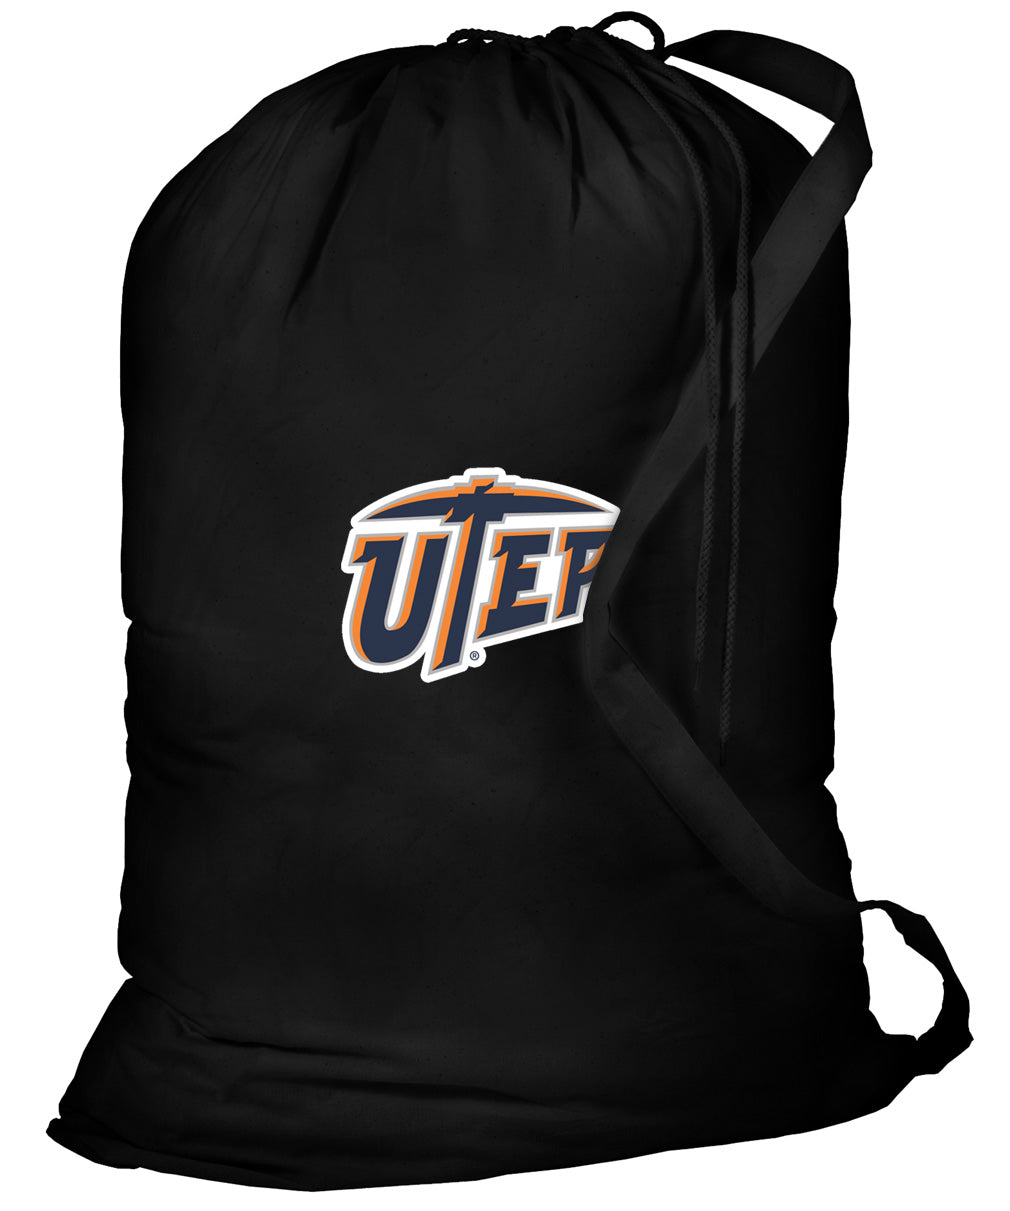 UTEP Laundry Bag University of Texas El Paso Clothes Bag